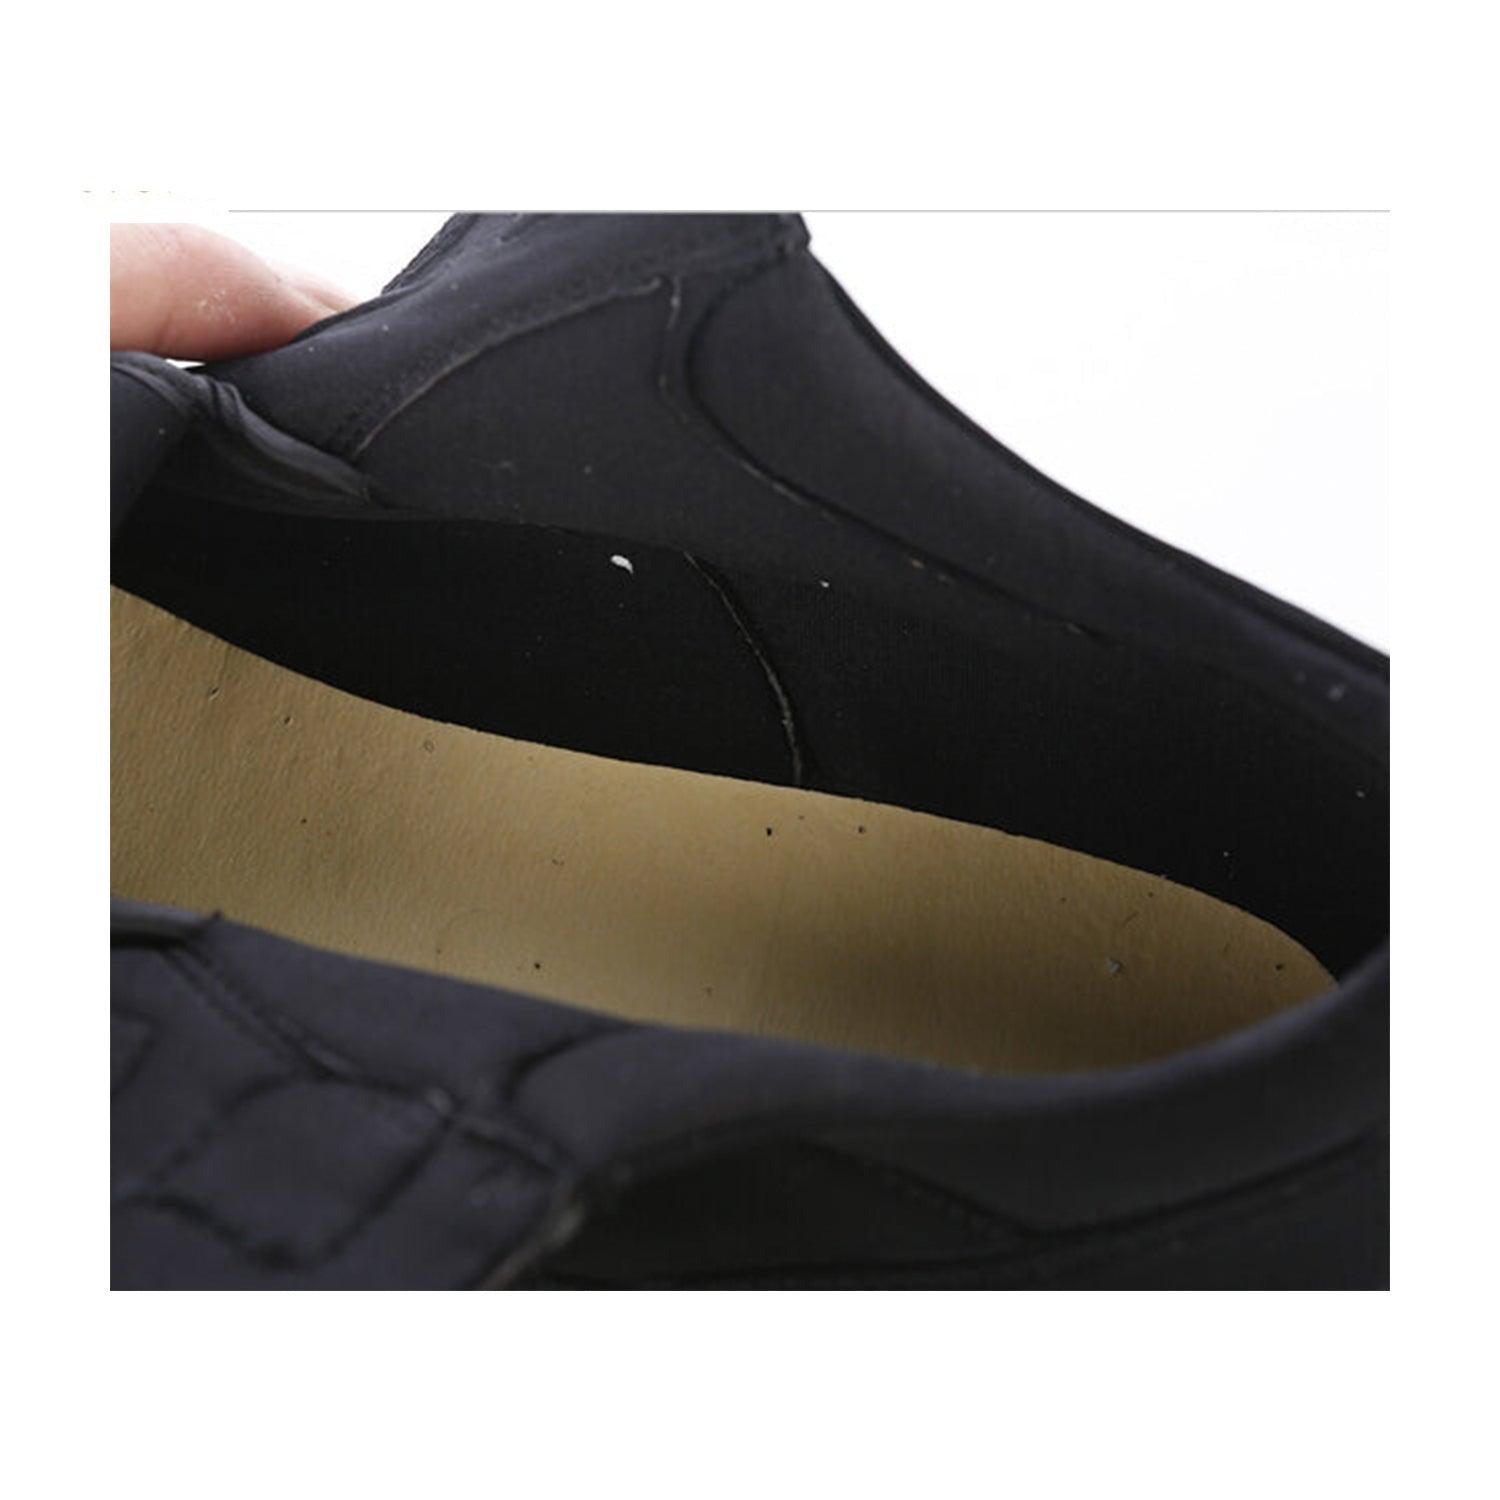 Black Leather / Neoprene Medical Grade Diabetic Footwear - Anjelstore 